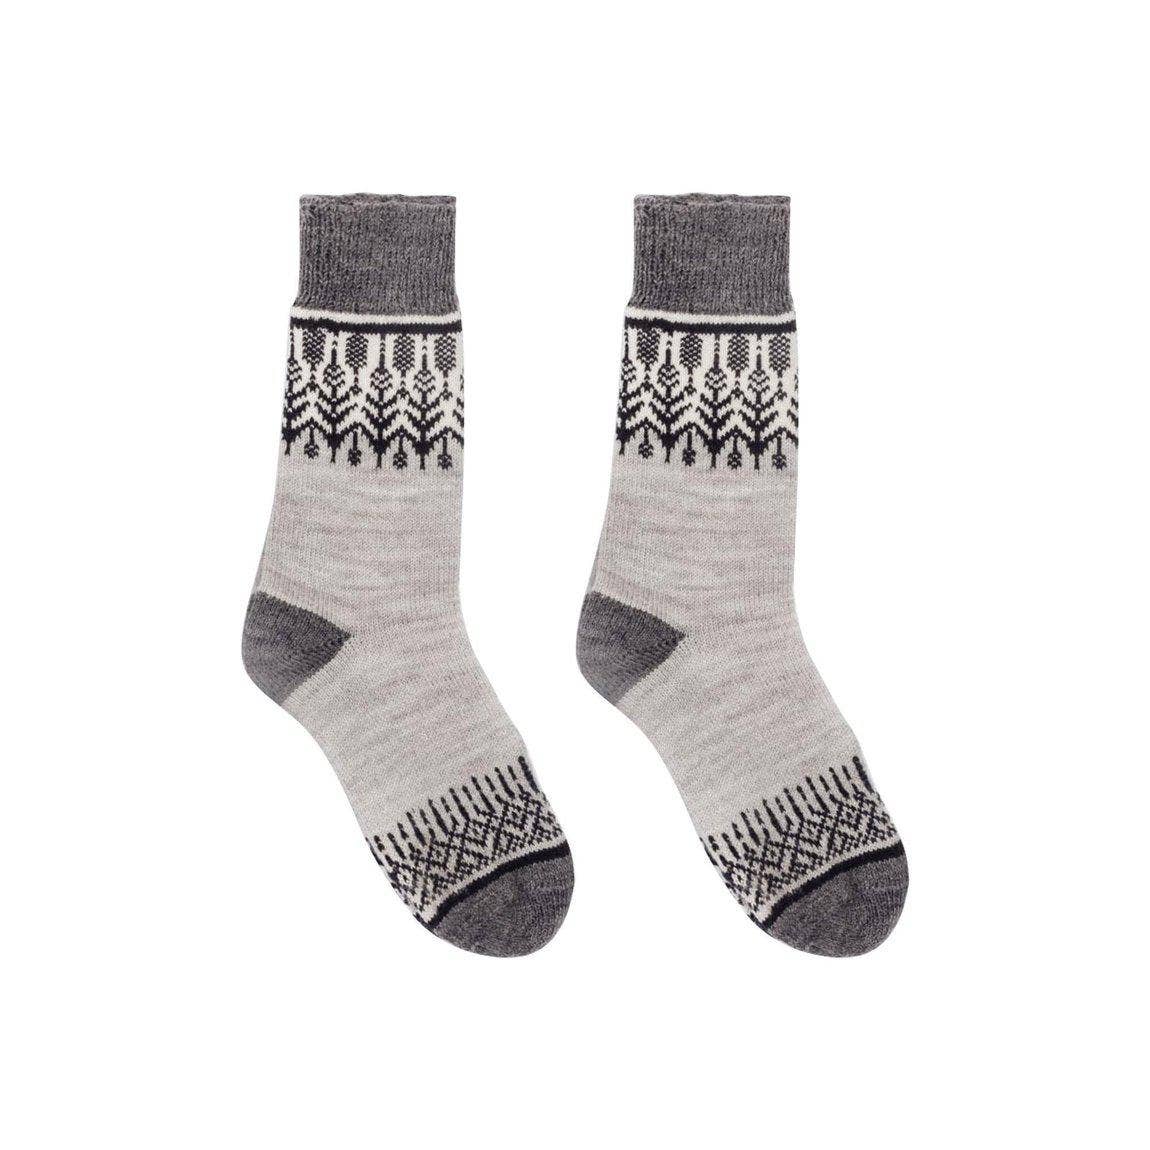 Nordic Merino Wool Socks (Yule - Ash) - Unisex: Large